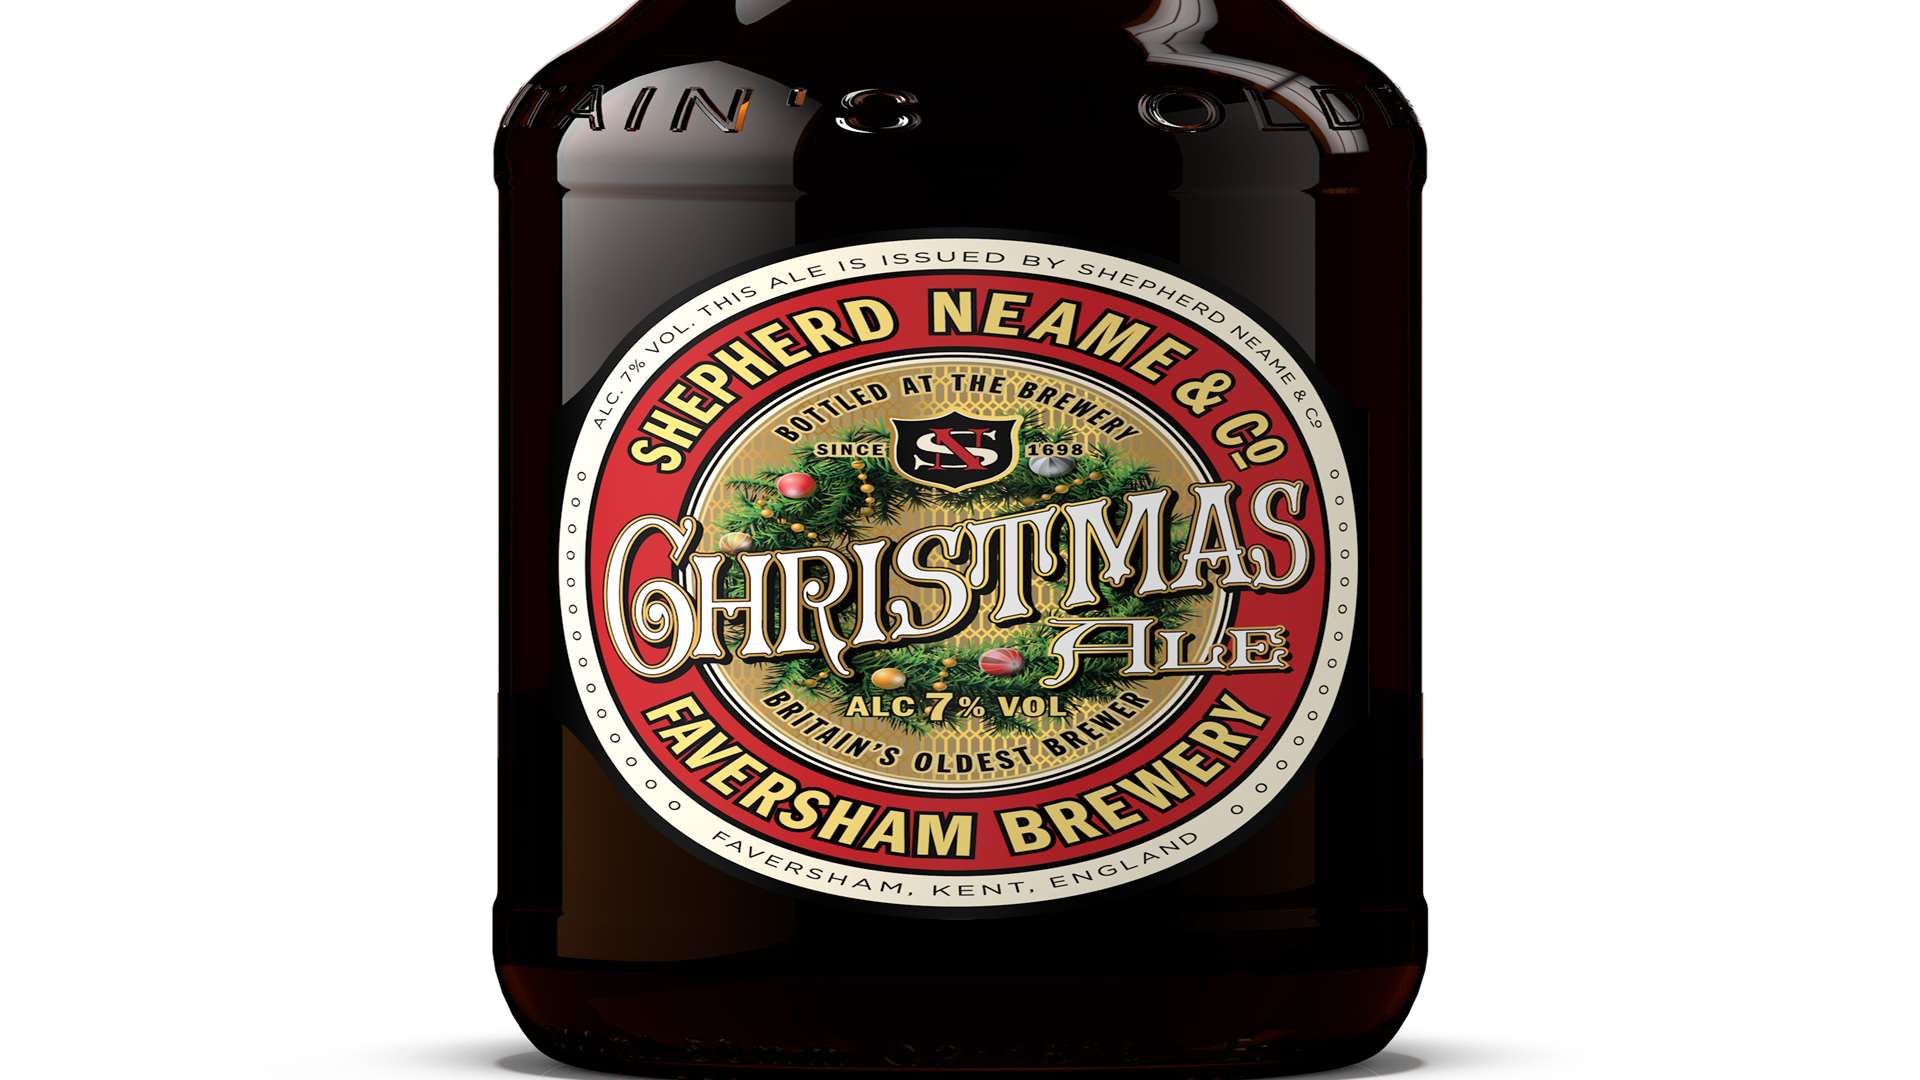 Shepherd Neame's Christmas Ale